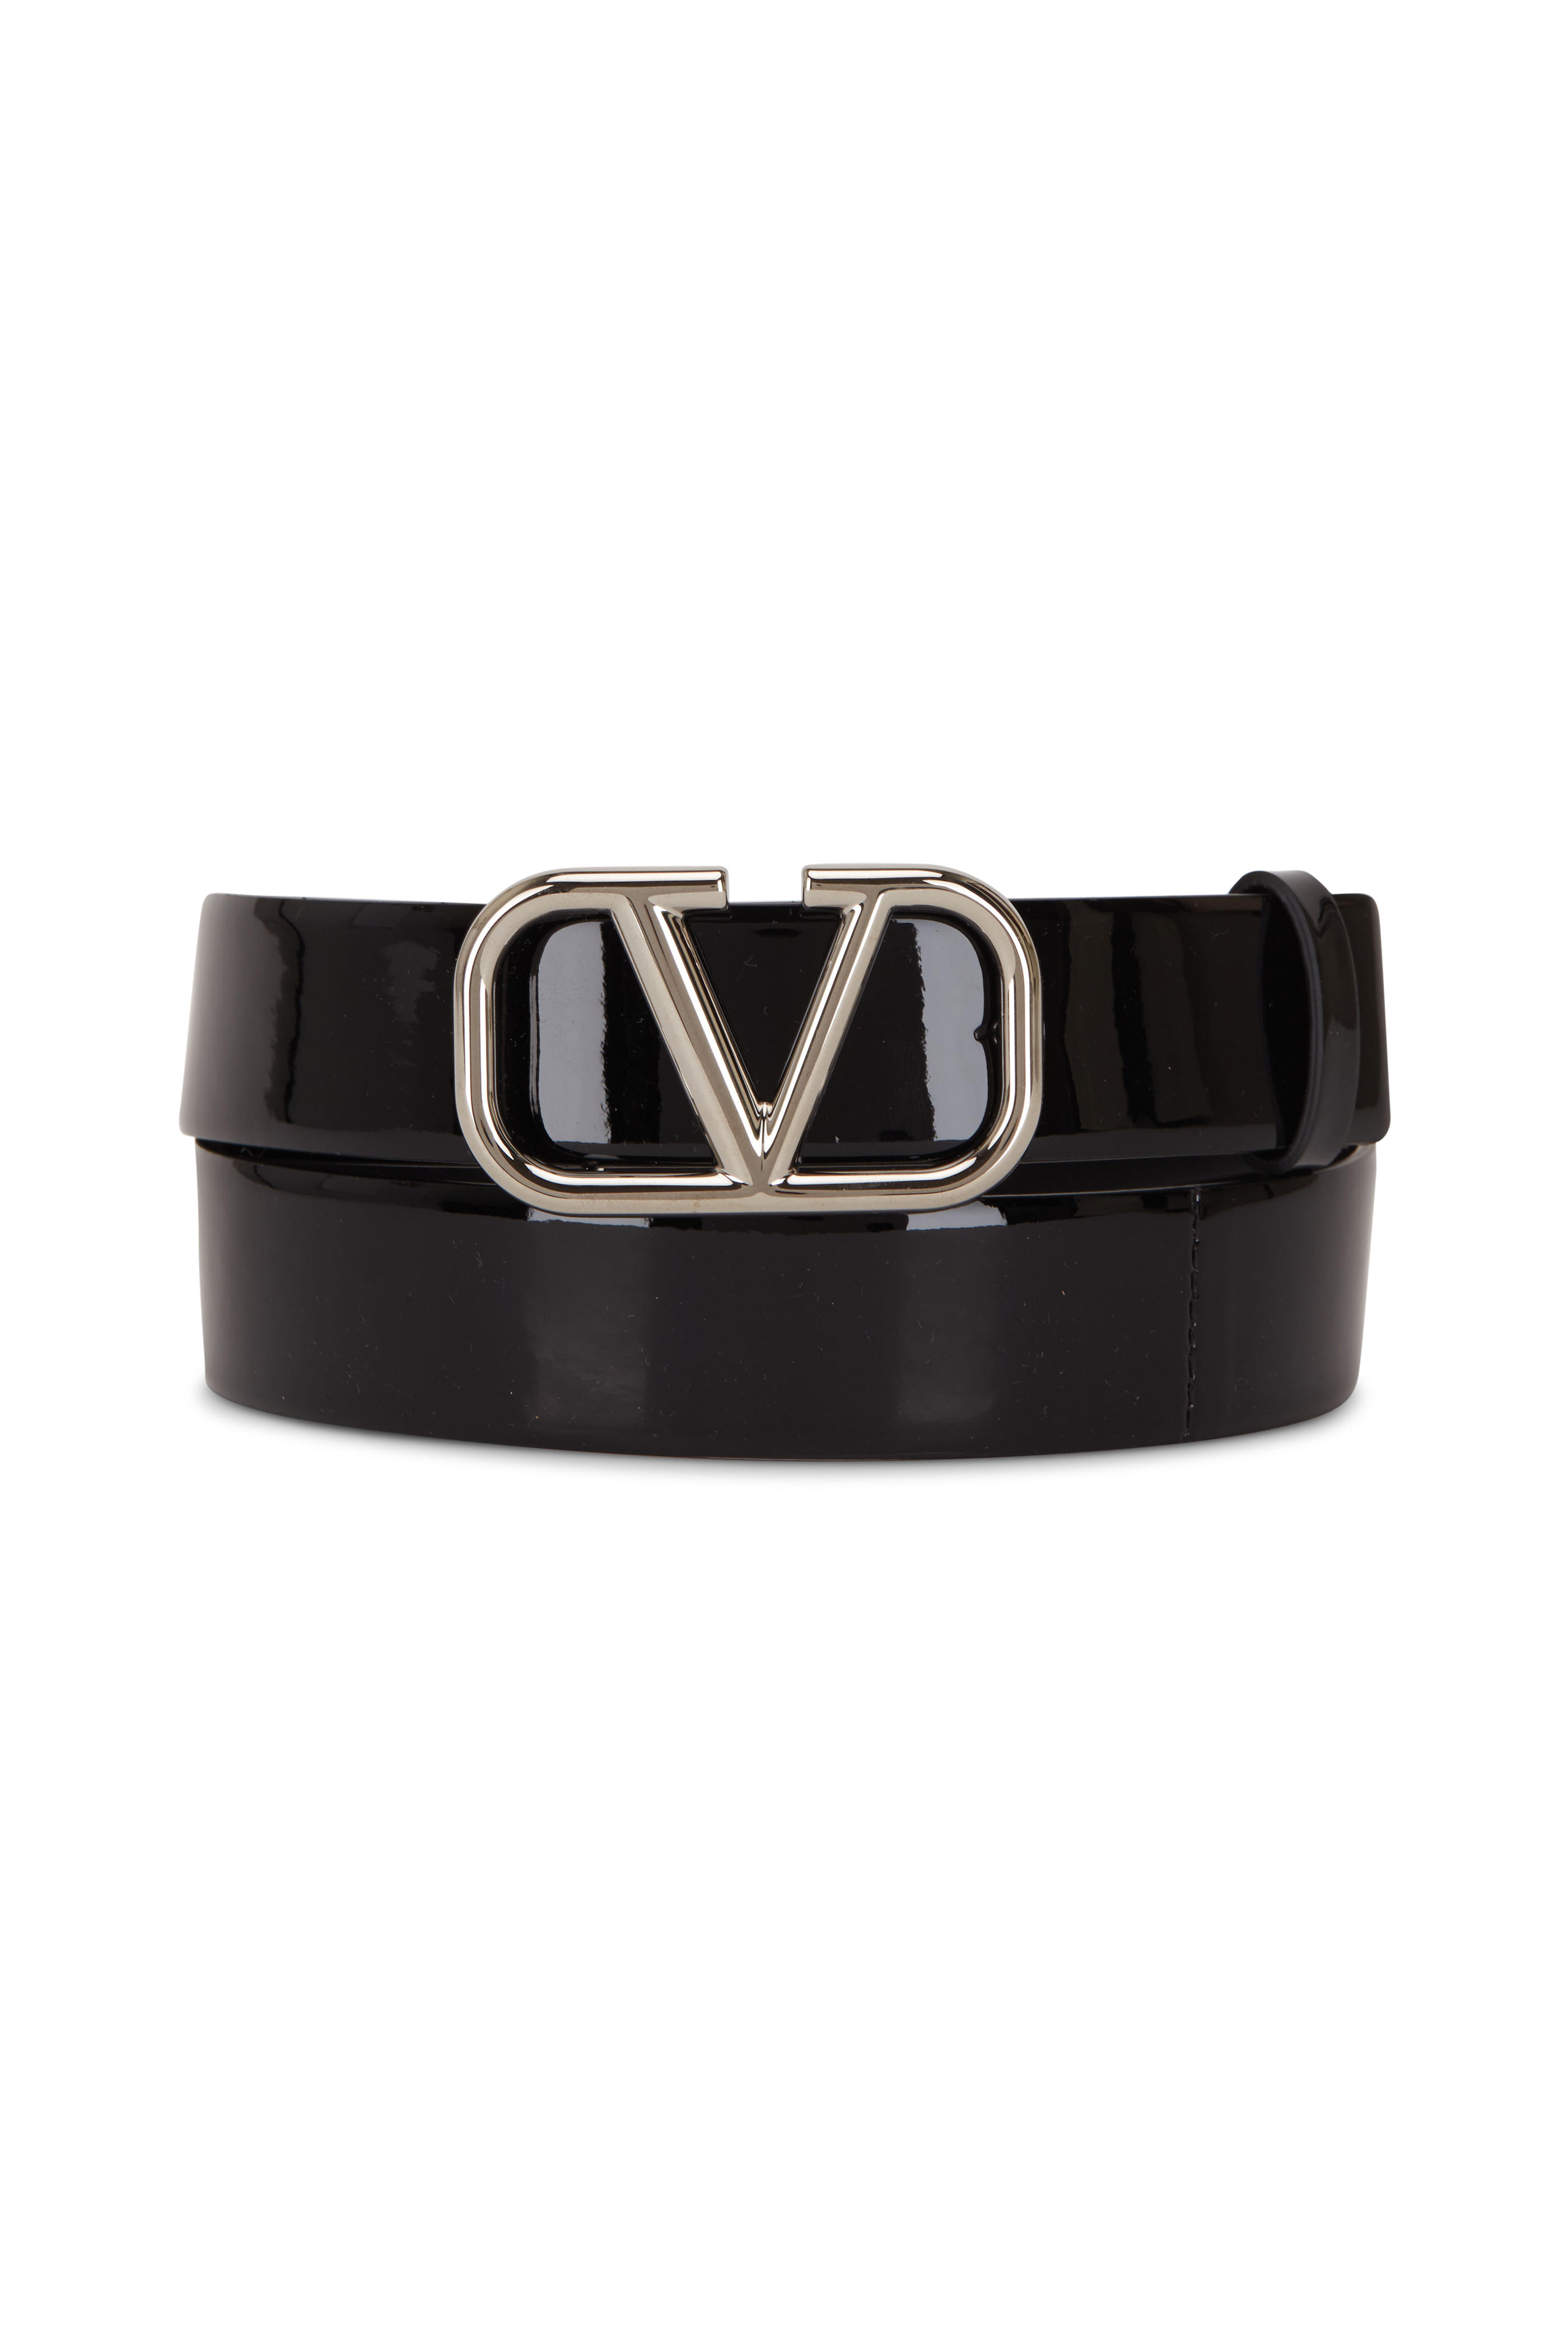 VLogo Black Patent Leather Skinny Logo Belt